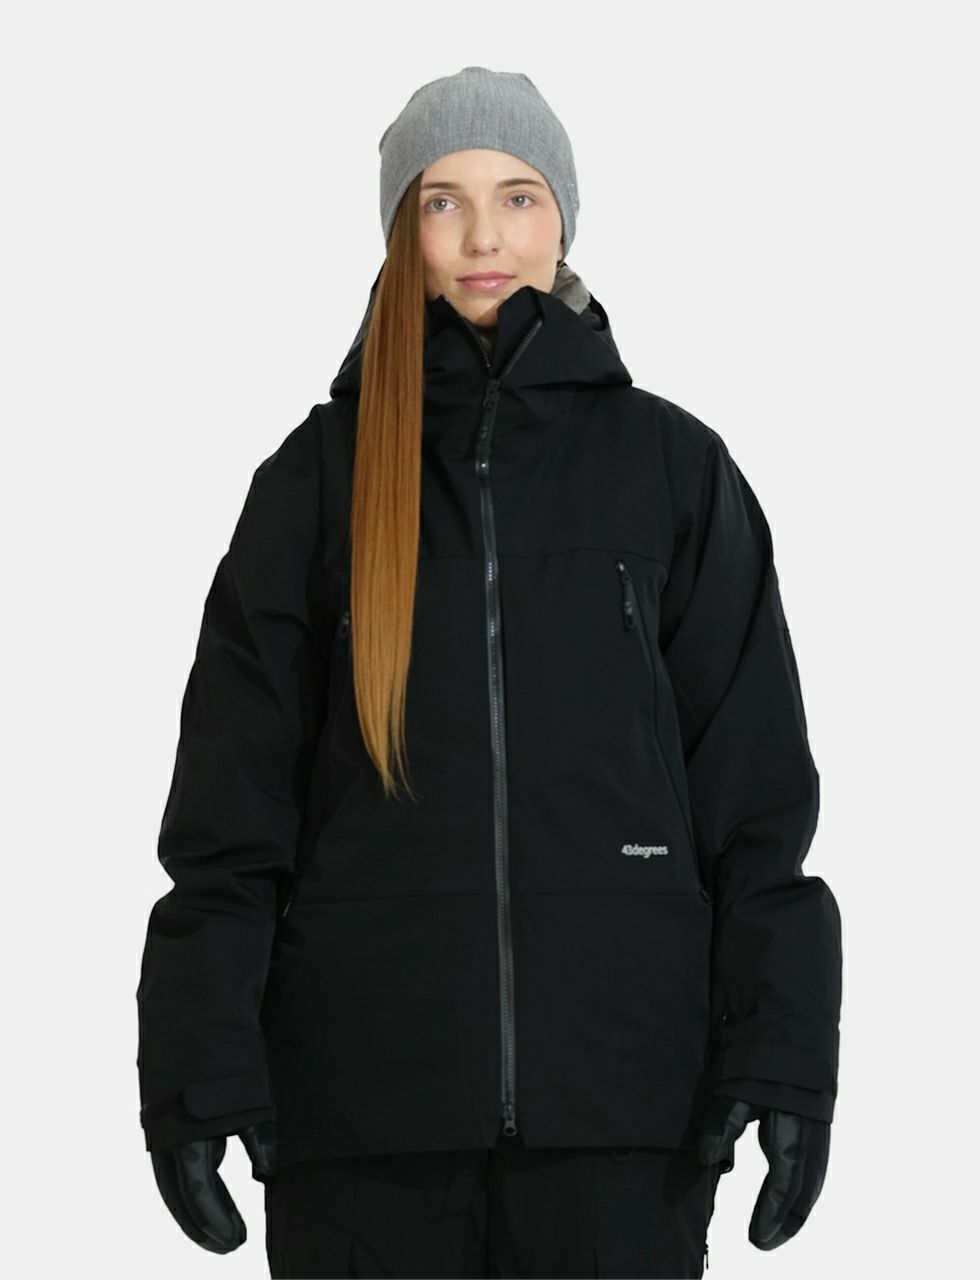 43DEGREES W Padding Peak Jacket袖丈67センチ - スノーボード